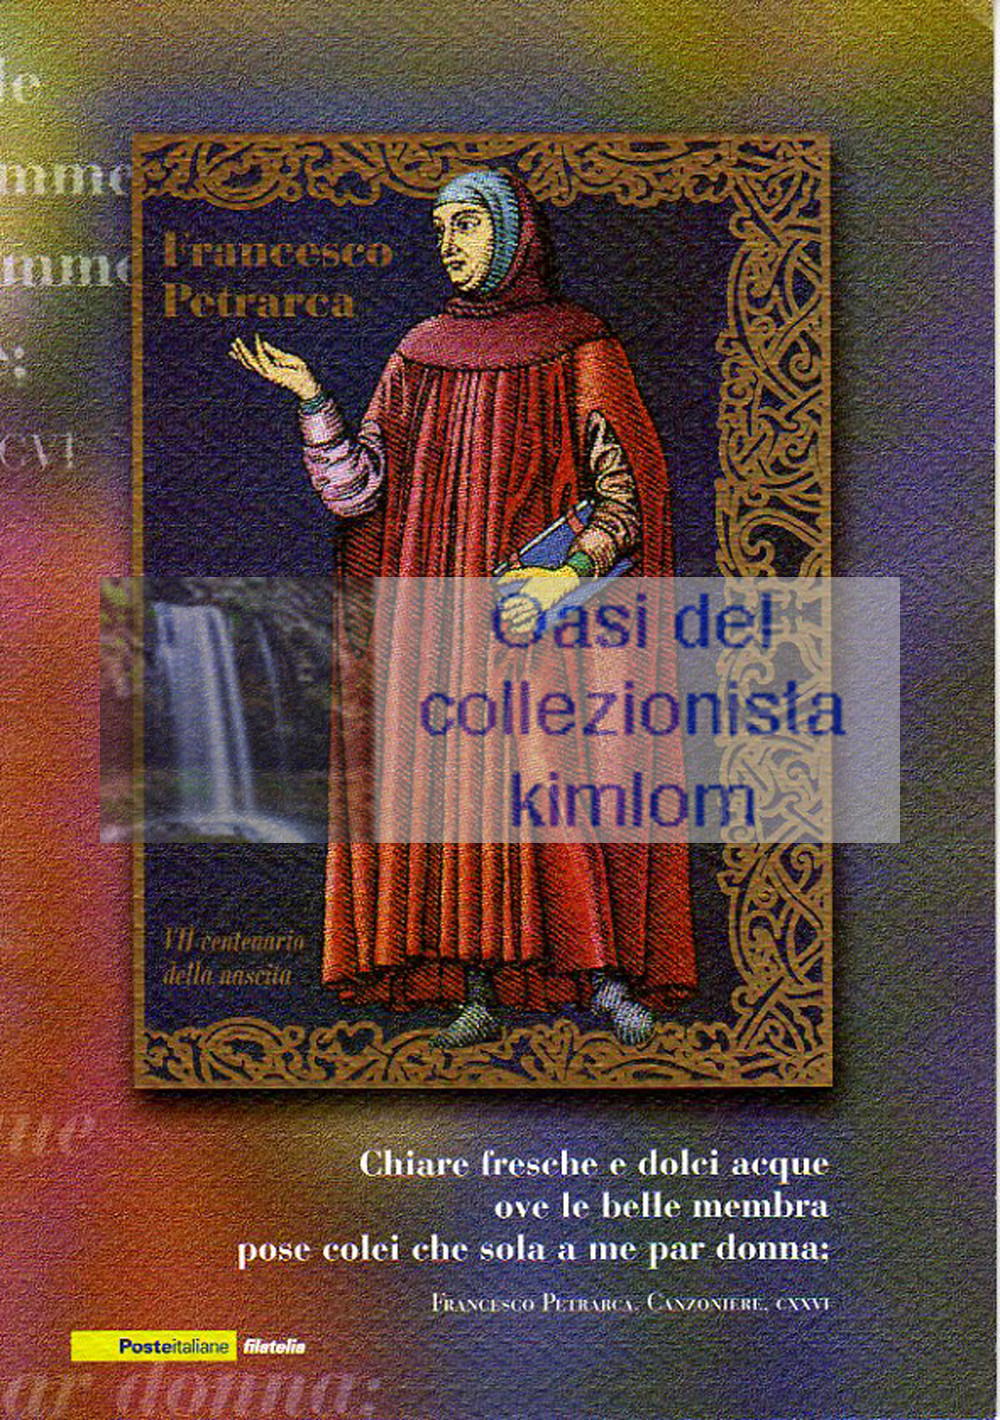 folder - Francesco Petrarca